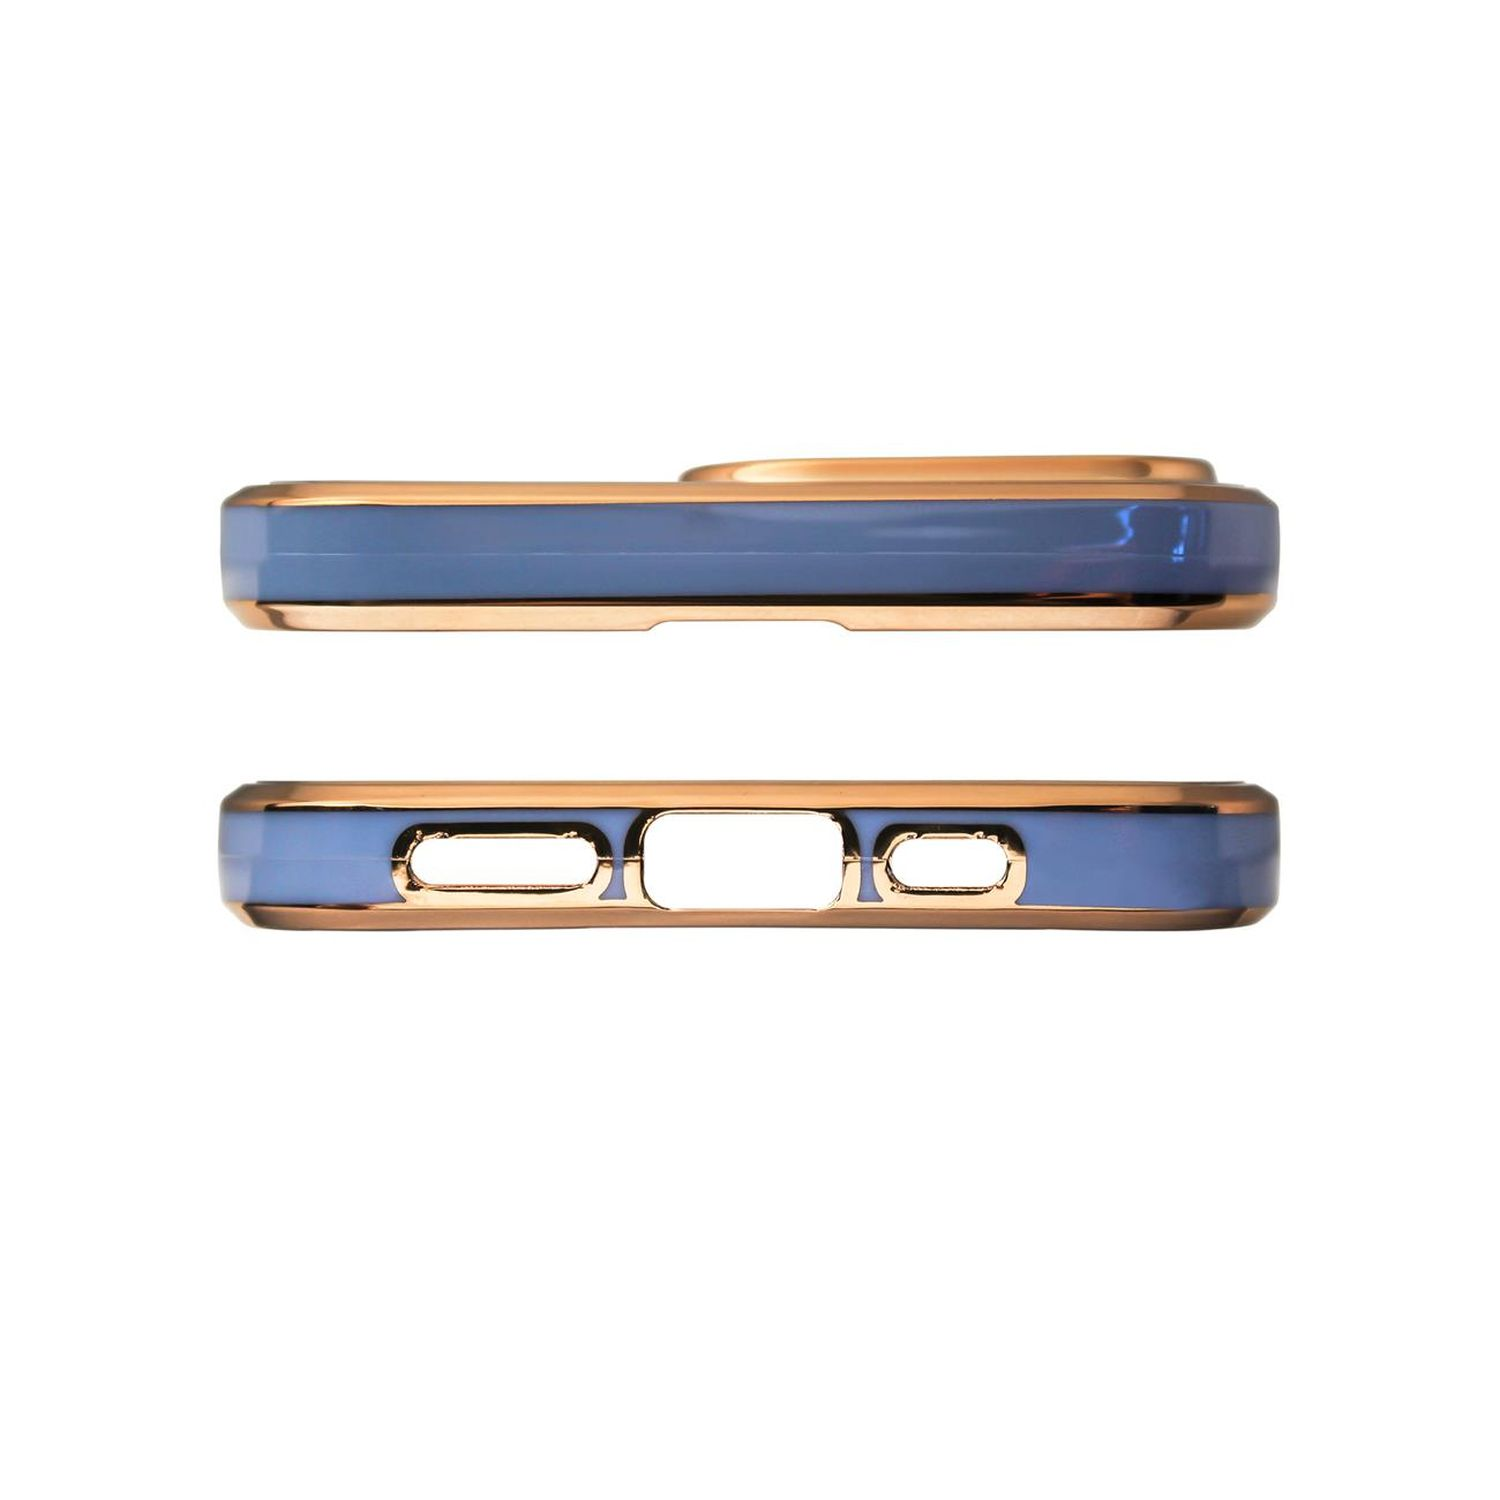 COFI Lighting Color Case, Blau-Gold A53 Samsung, Galaxy Backcover, 5G